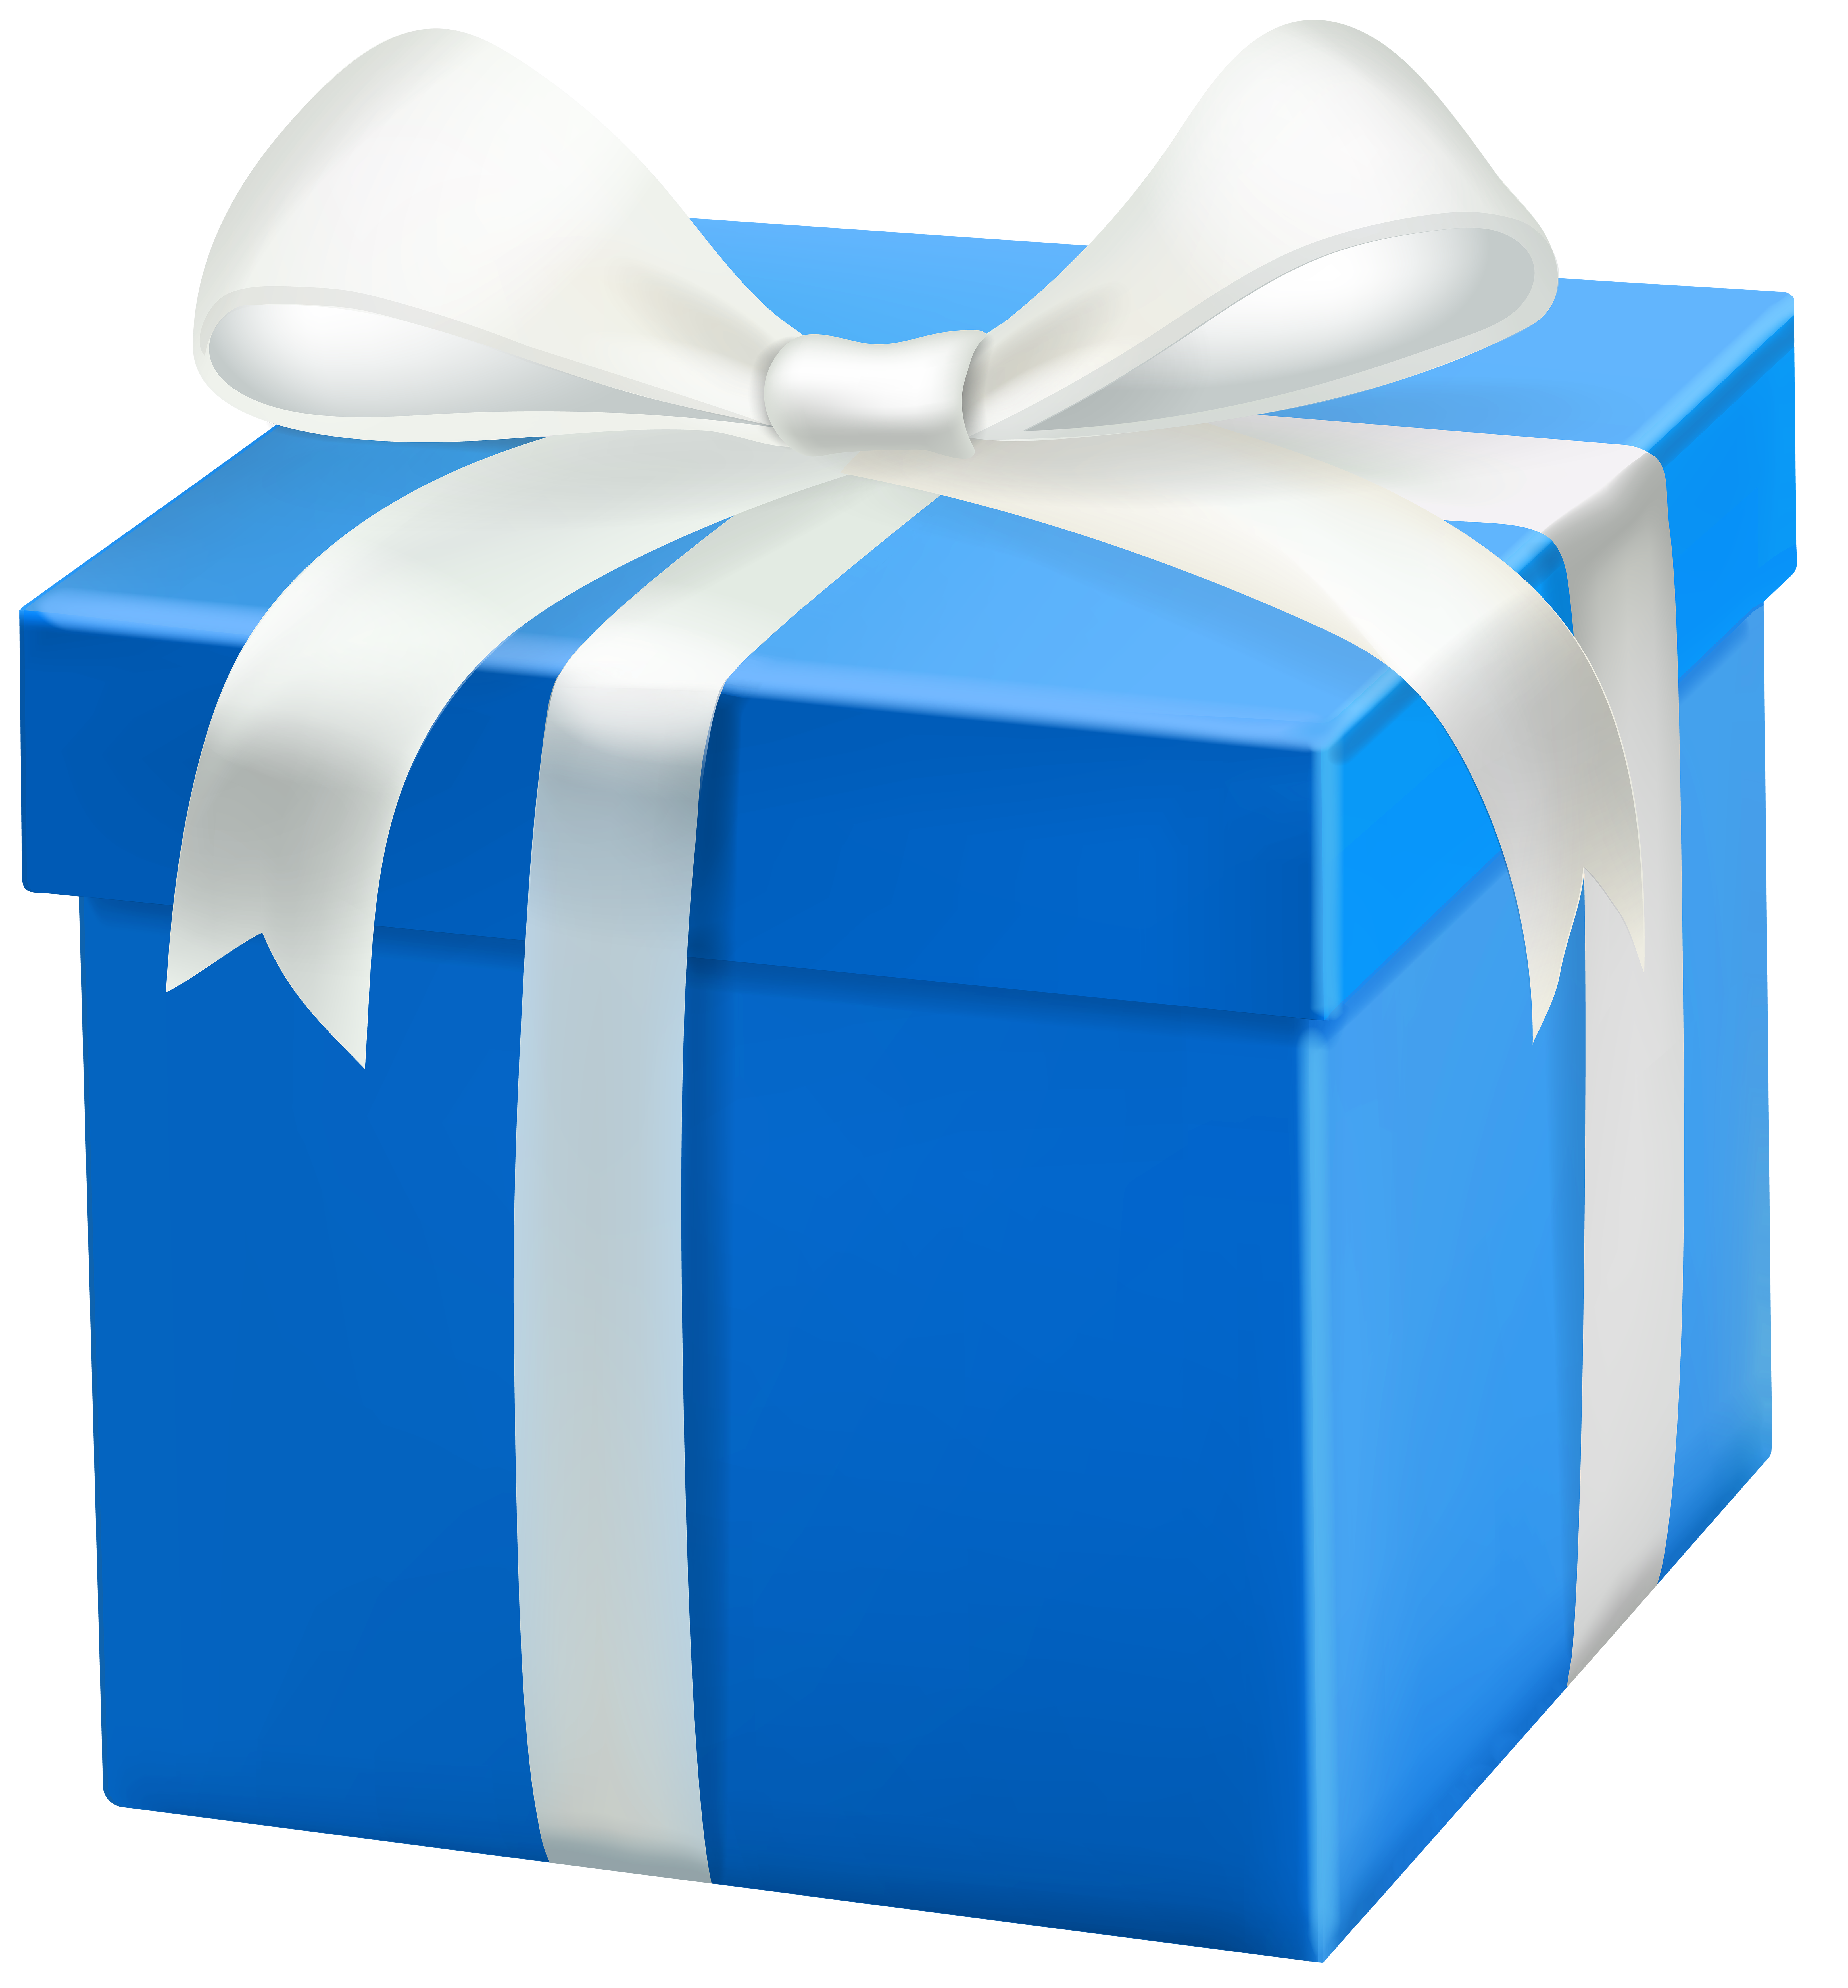 Коробки с подарками на прозрачном фоне. Подарочная коробка. Коробки для подарков. Подарок синий. Коробка подарок с бантом.